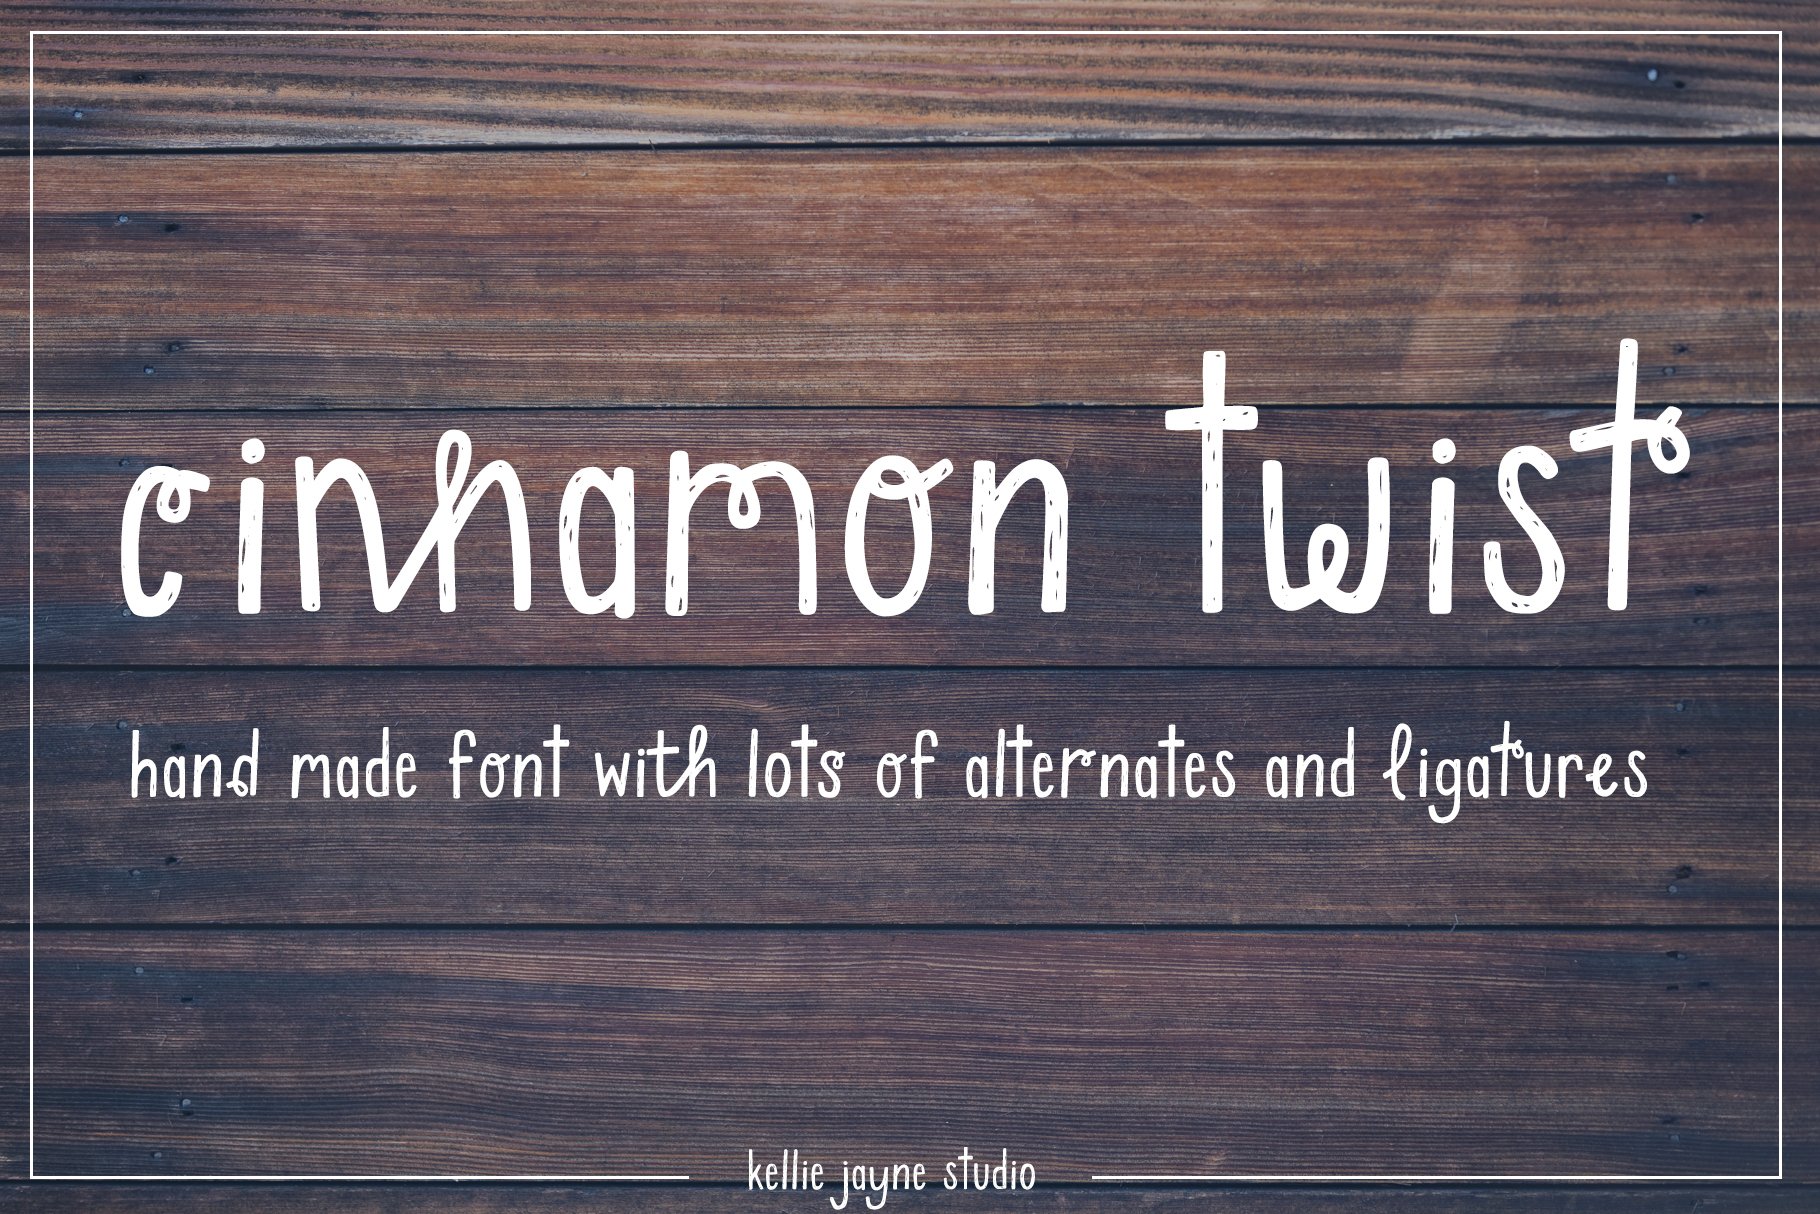 Cinnamon Twist Handdrawn Font cover image.